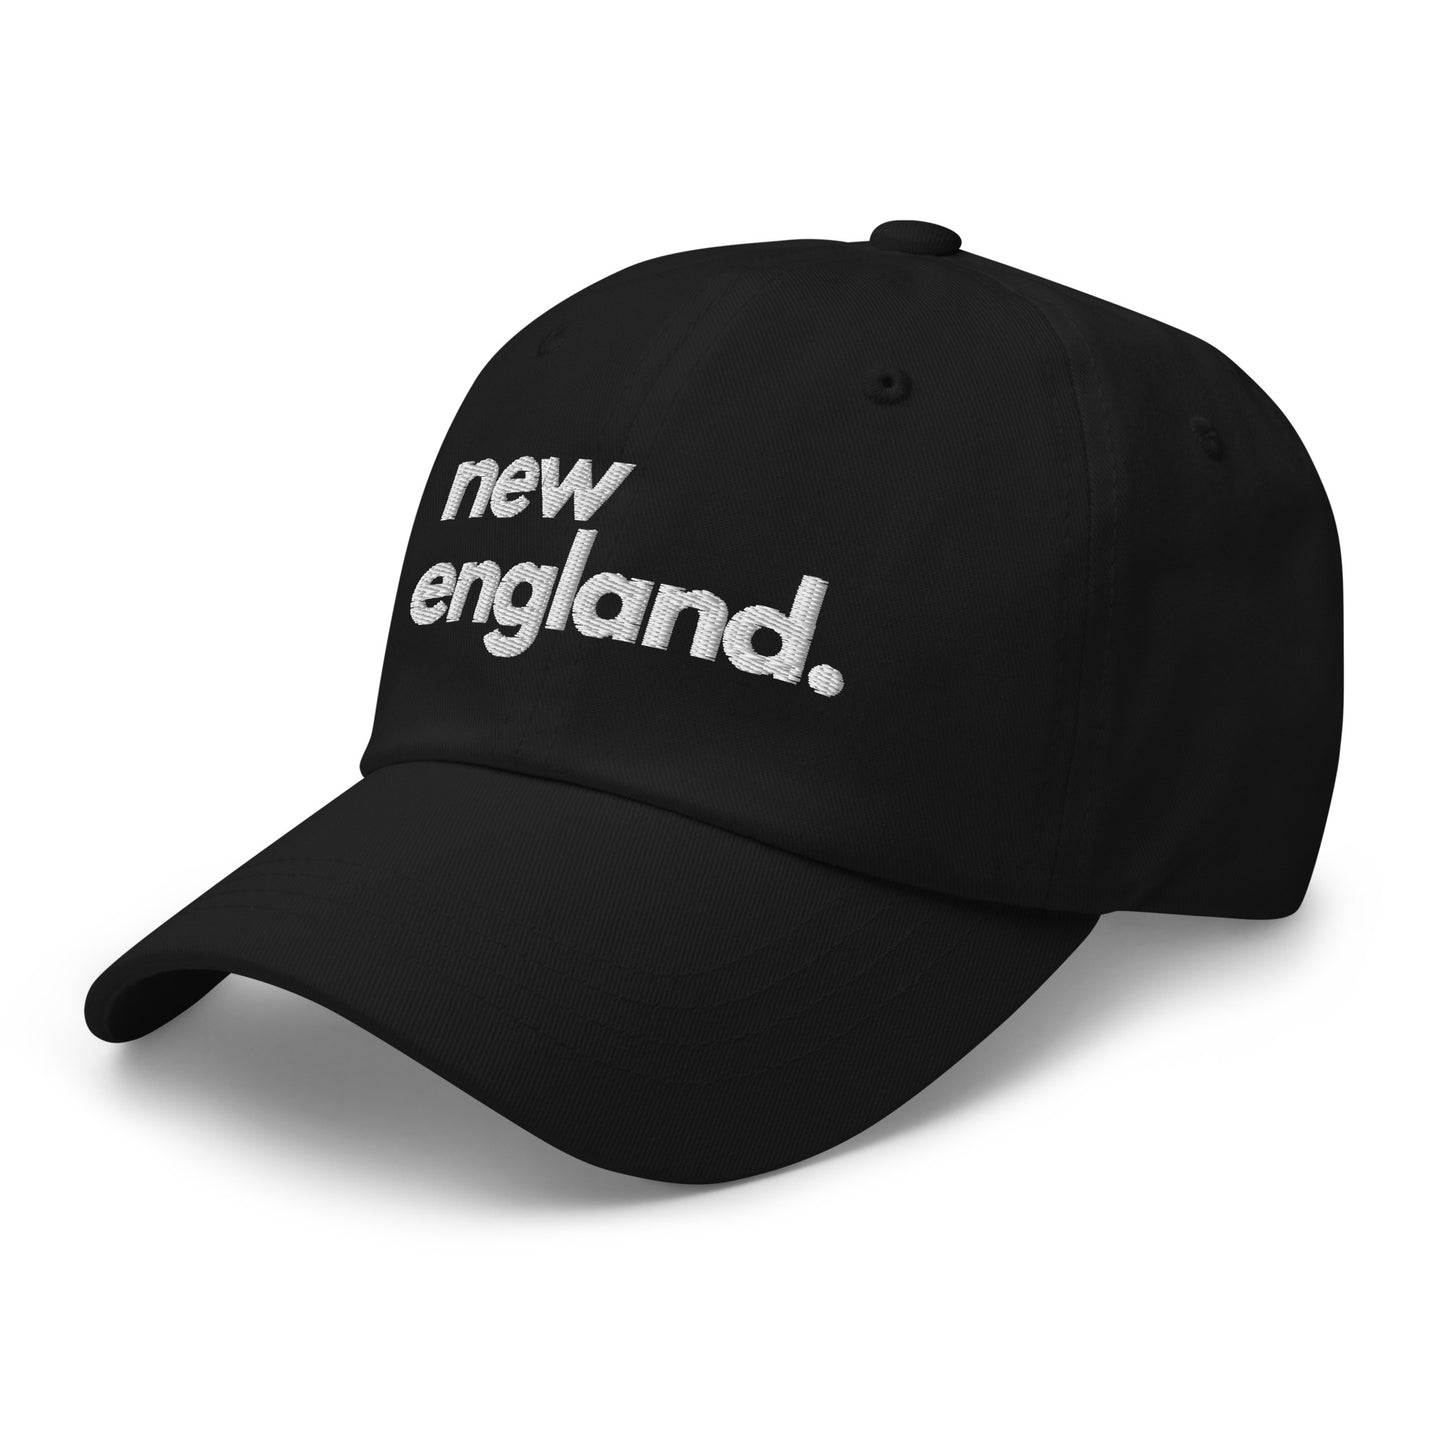 new england. Hat